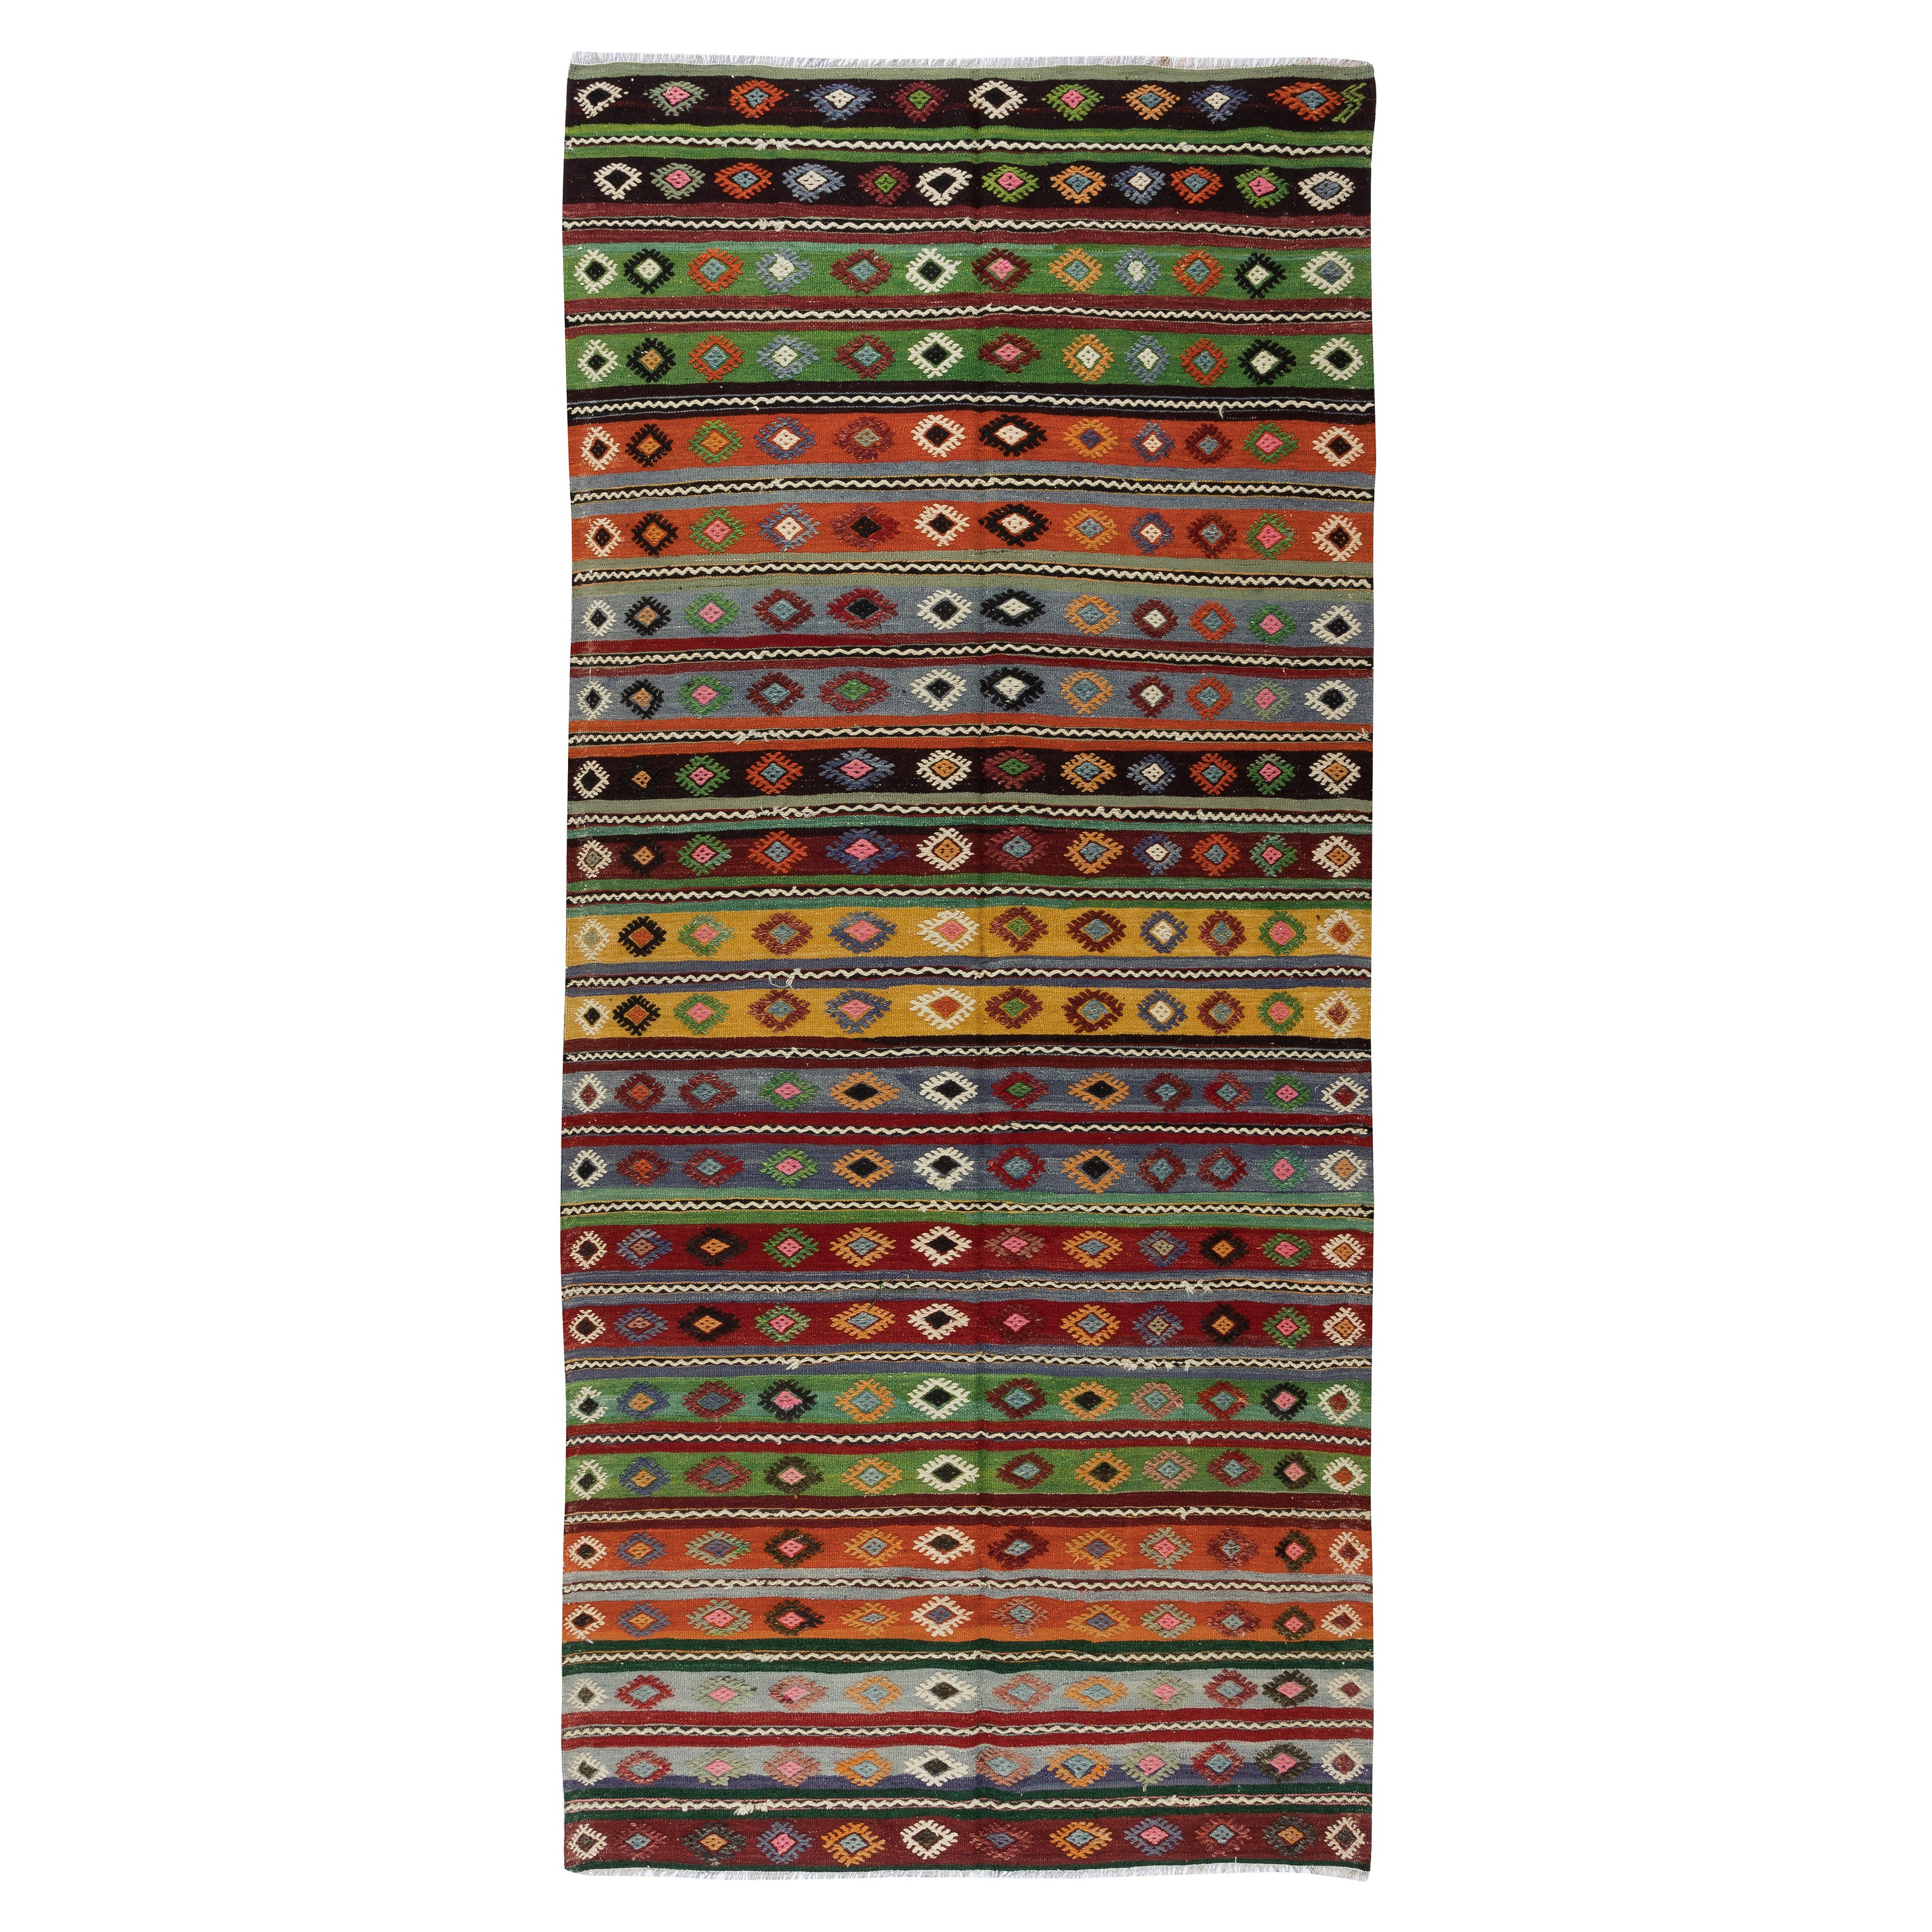 5x11.2 Ft Vintage Turkish Kilim Runner. Colorful Hand-Woven Rug for Hallway For Sale